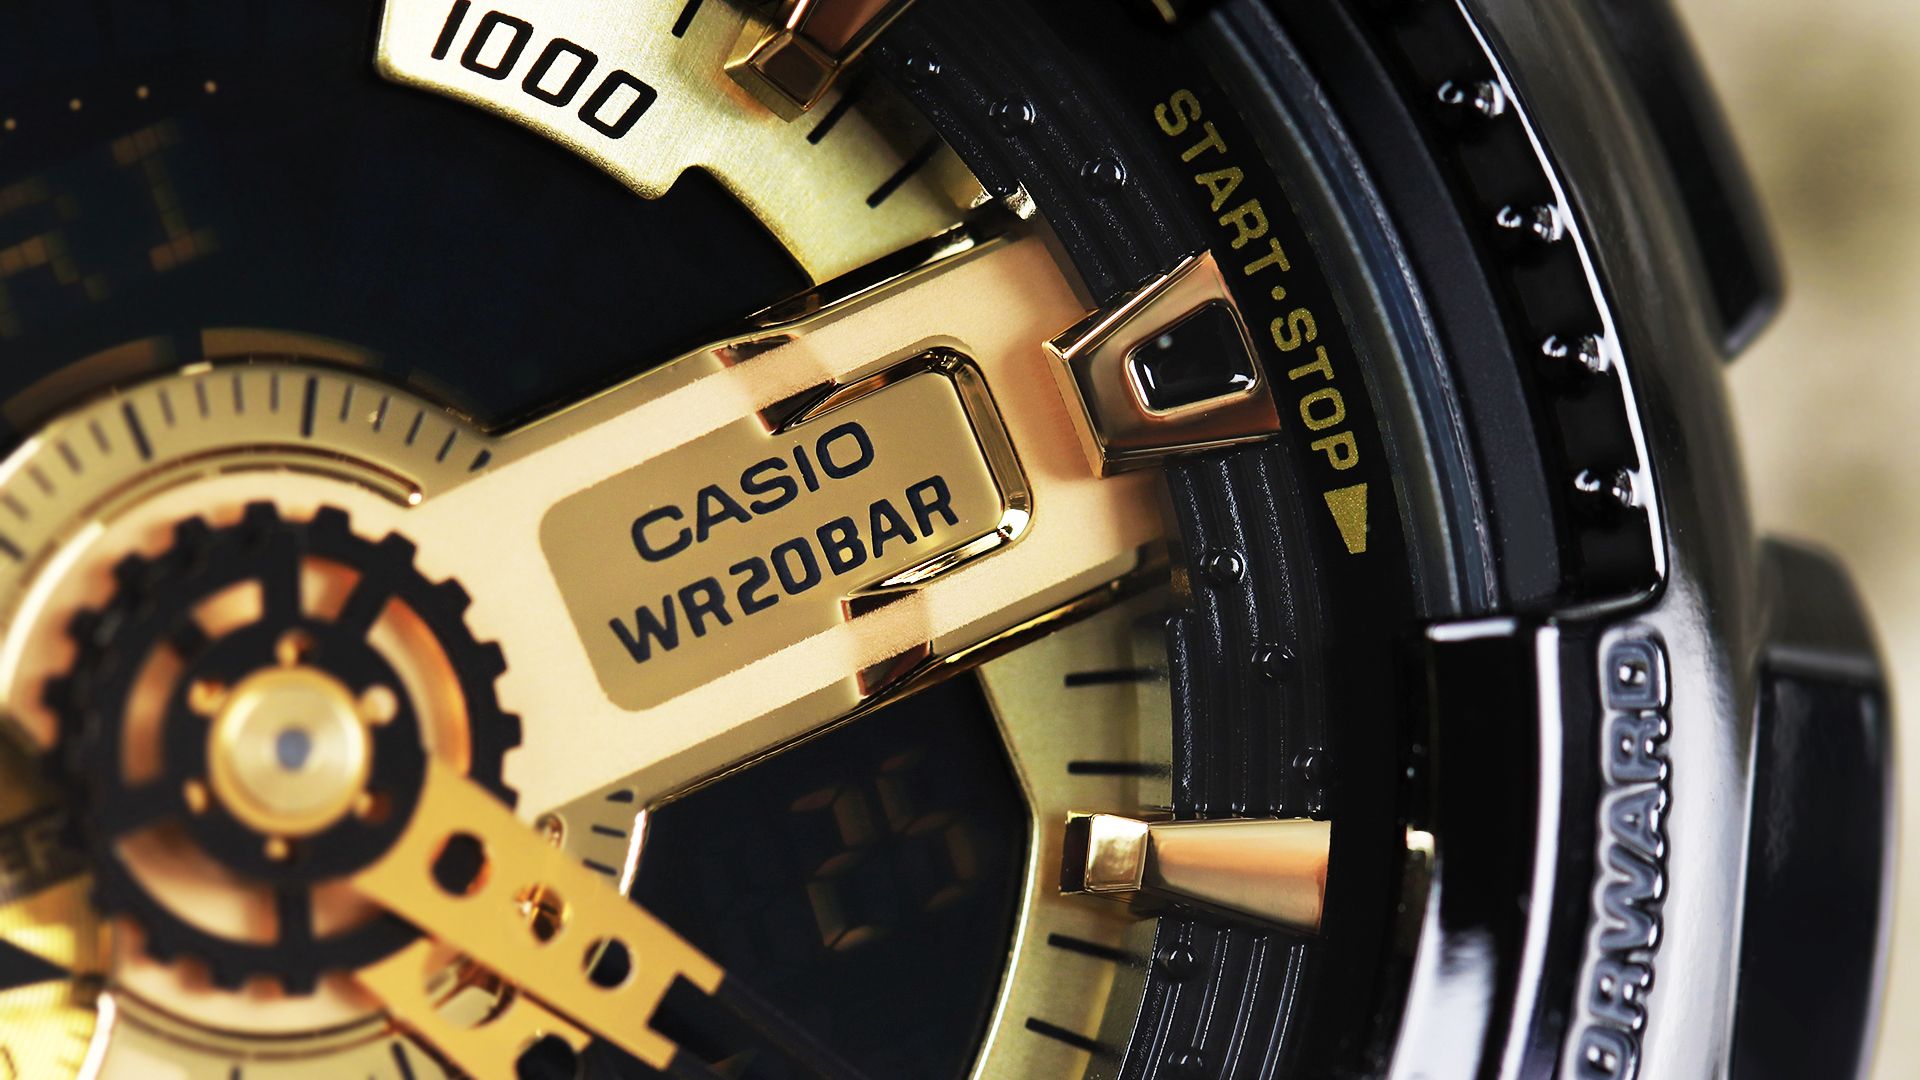 Casio G-Shock Gold - GA-110GB-1AER